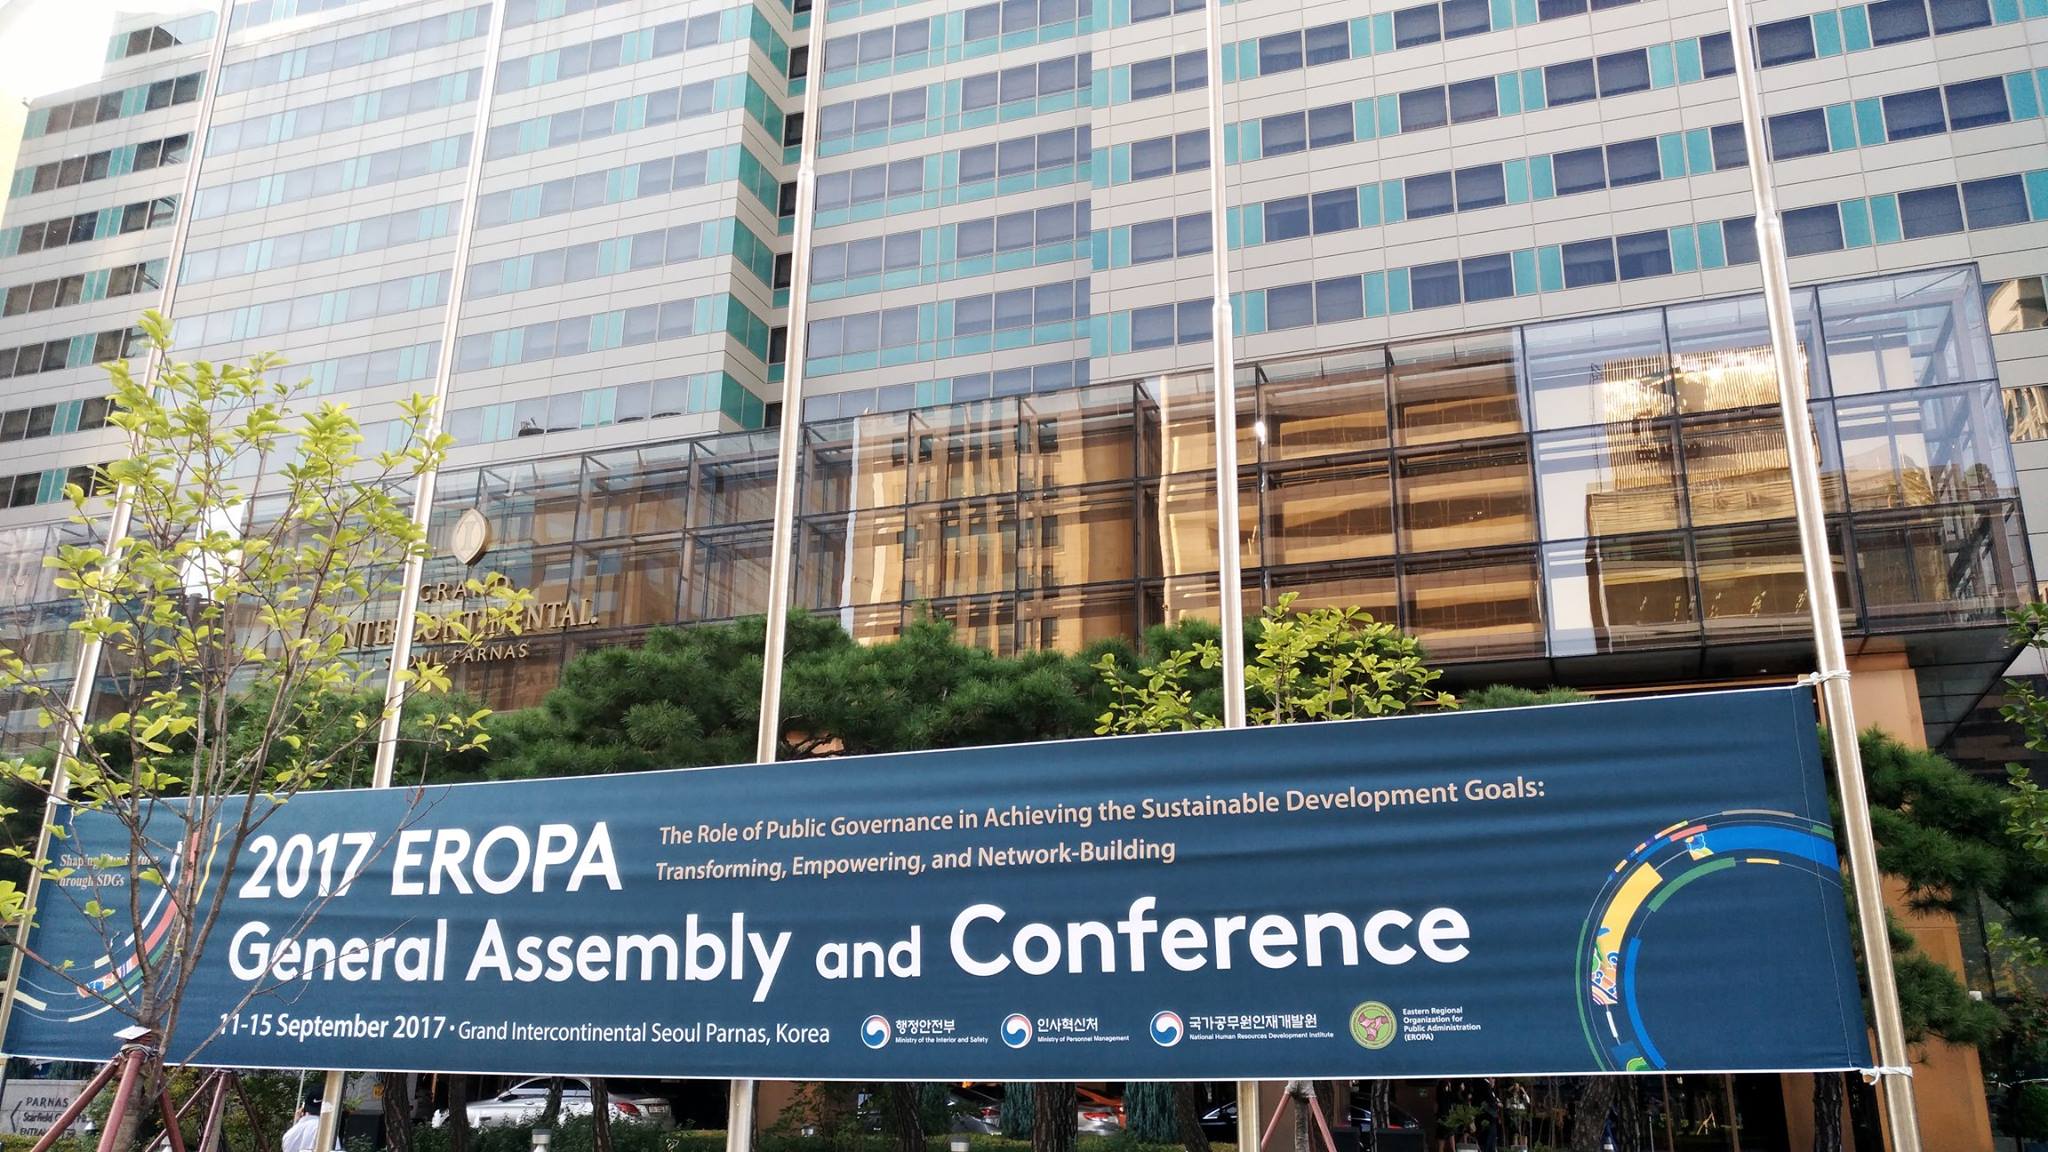 Korean government organizes 2017 EROPA GA in Seoul 큰 이미지[마우스 클릭 시 창닫기]